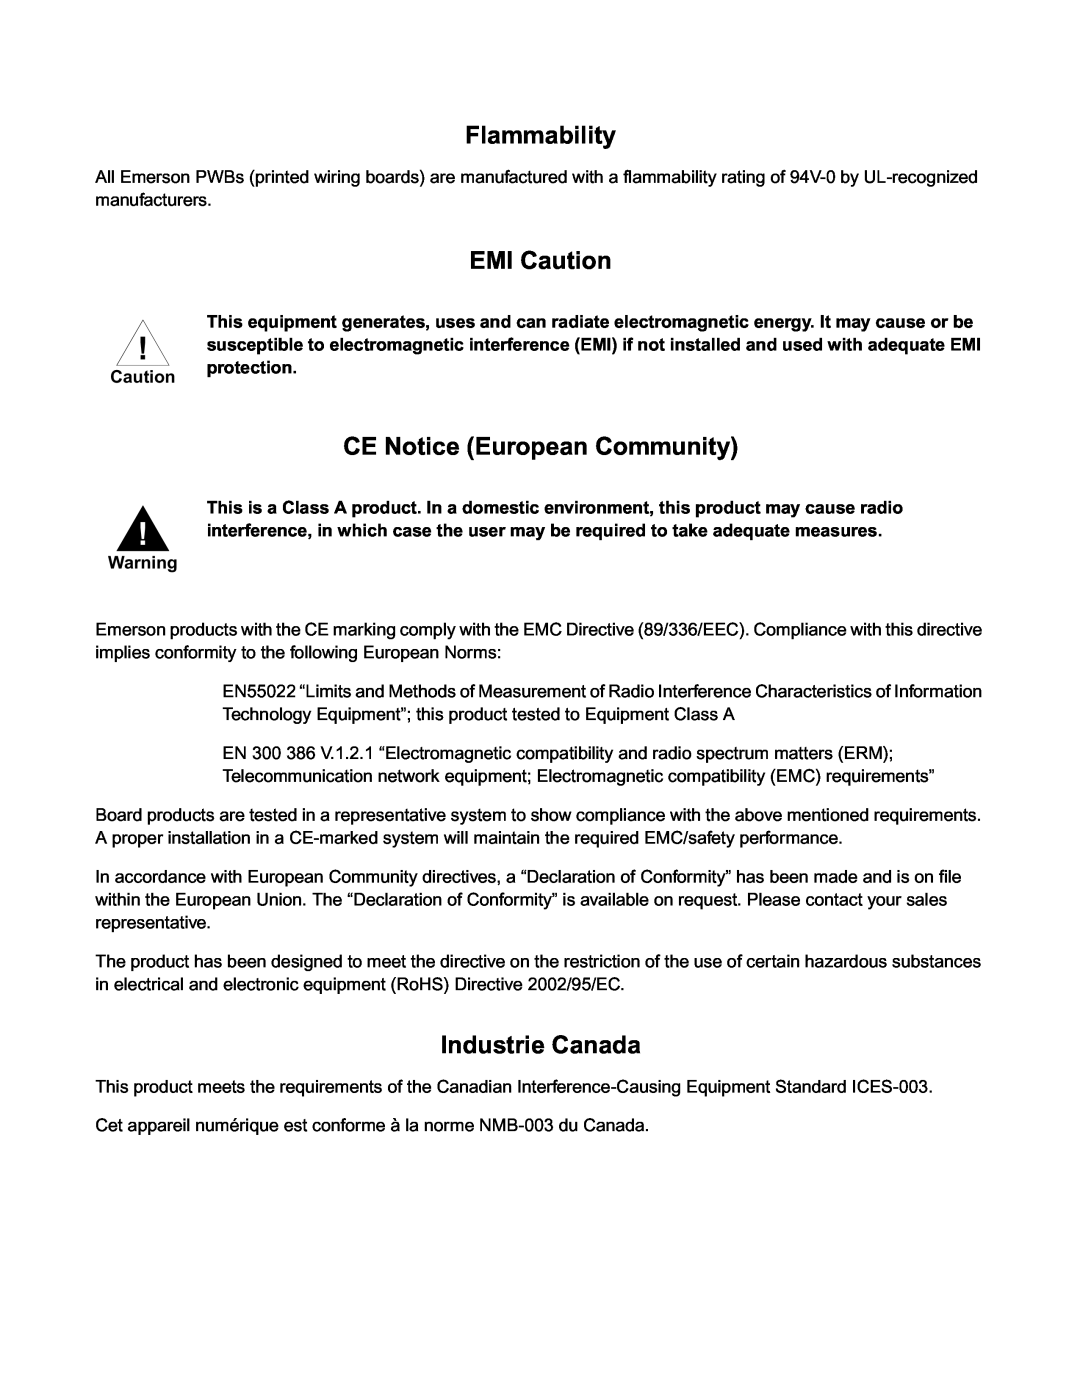 Emerson IPMC7616E, IPMC7126E manual Flammability, EMI Caution, CE Notice European Community, Industrie Canada 